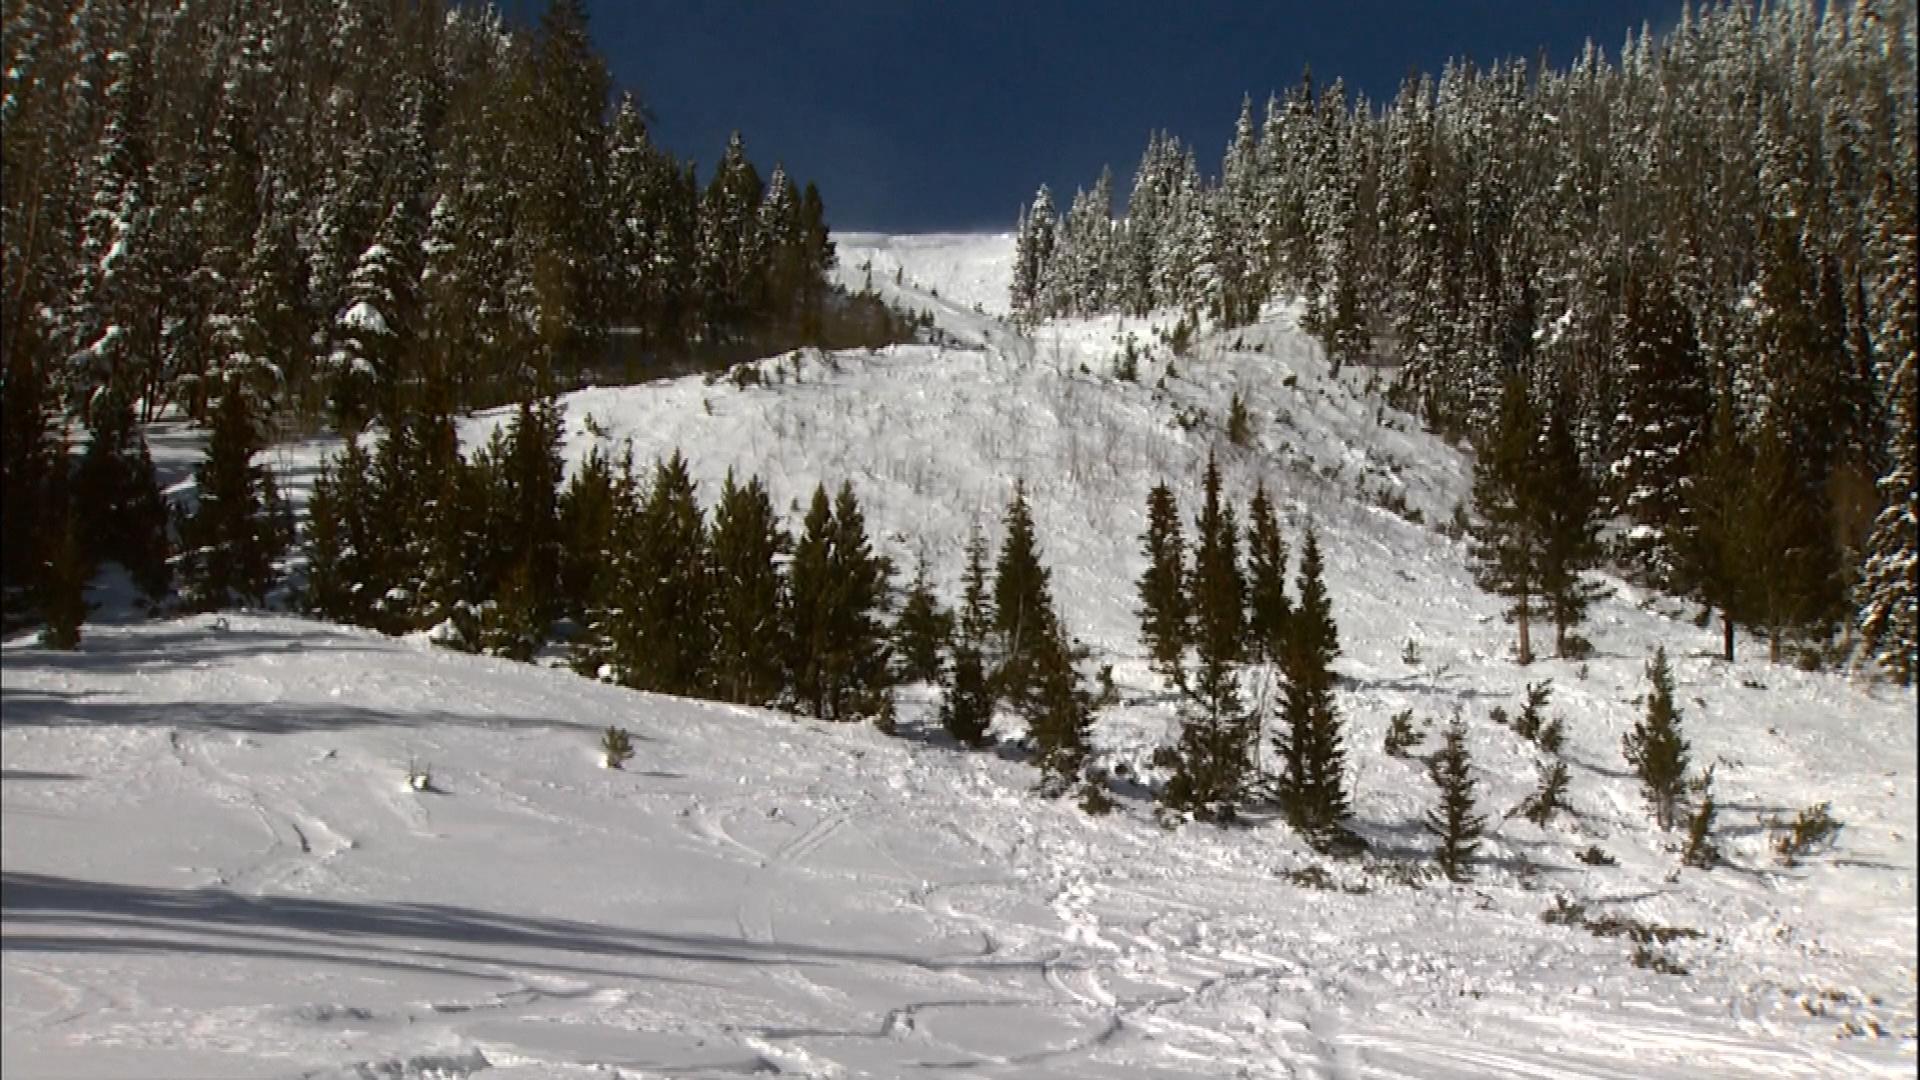 Missing Skier’s Body Found After Avalanche Near Keystone